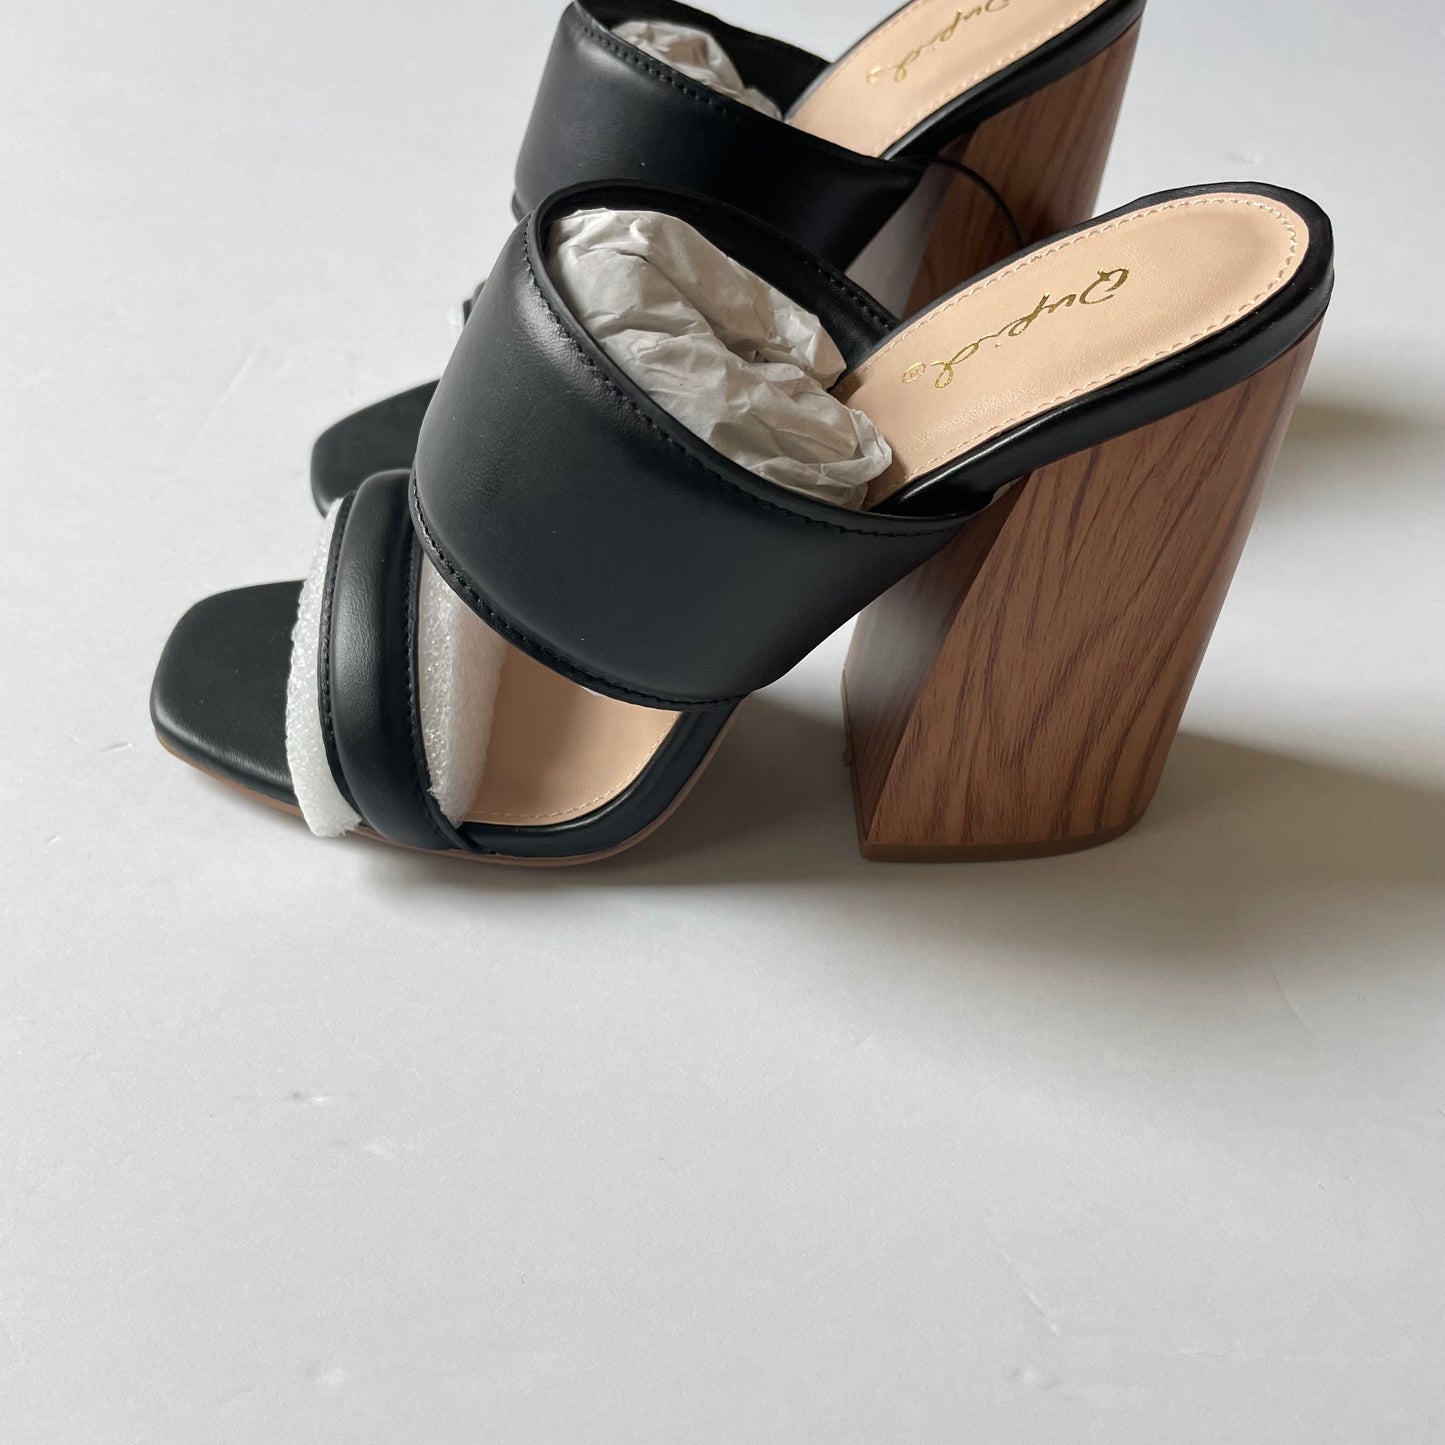 Black Shoes Heels Block Qupid, Size 9